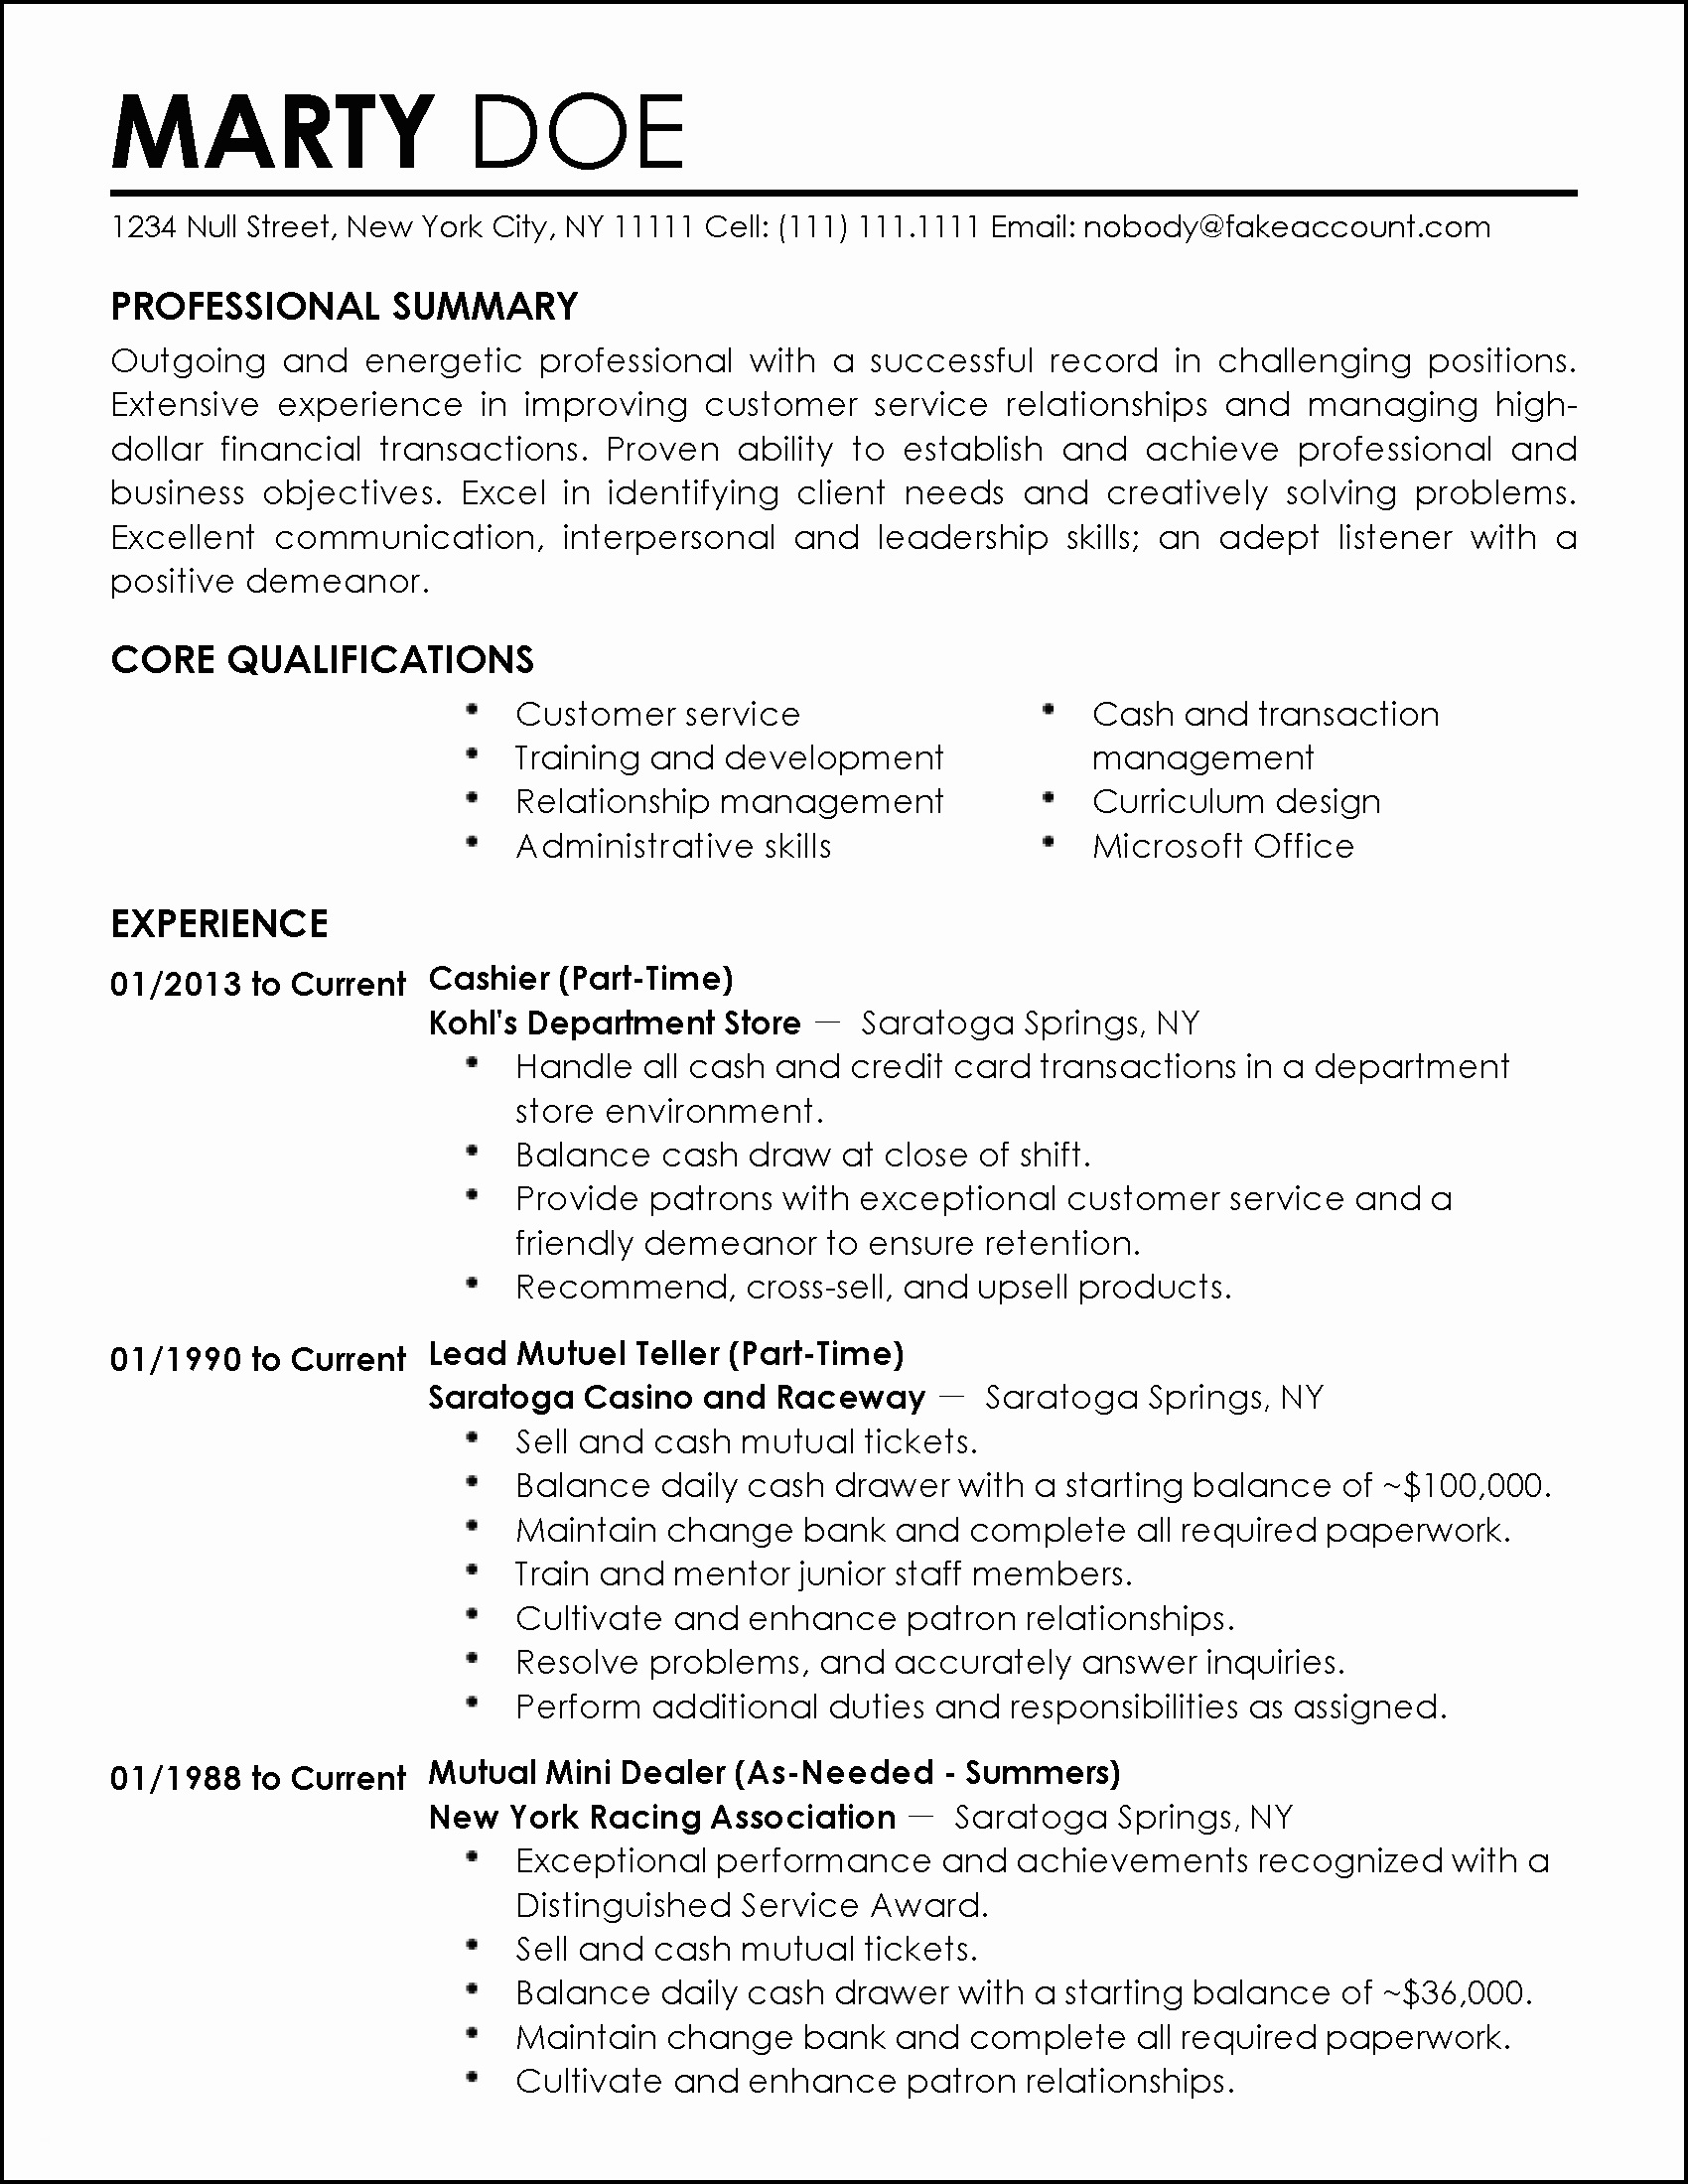 Professional Resume Writers Cheap Professional Resume Writing Services 16 professional resume writers|wikiresume.com